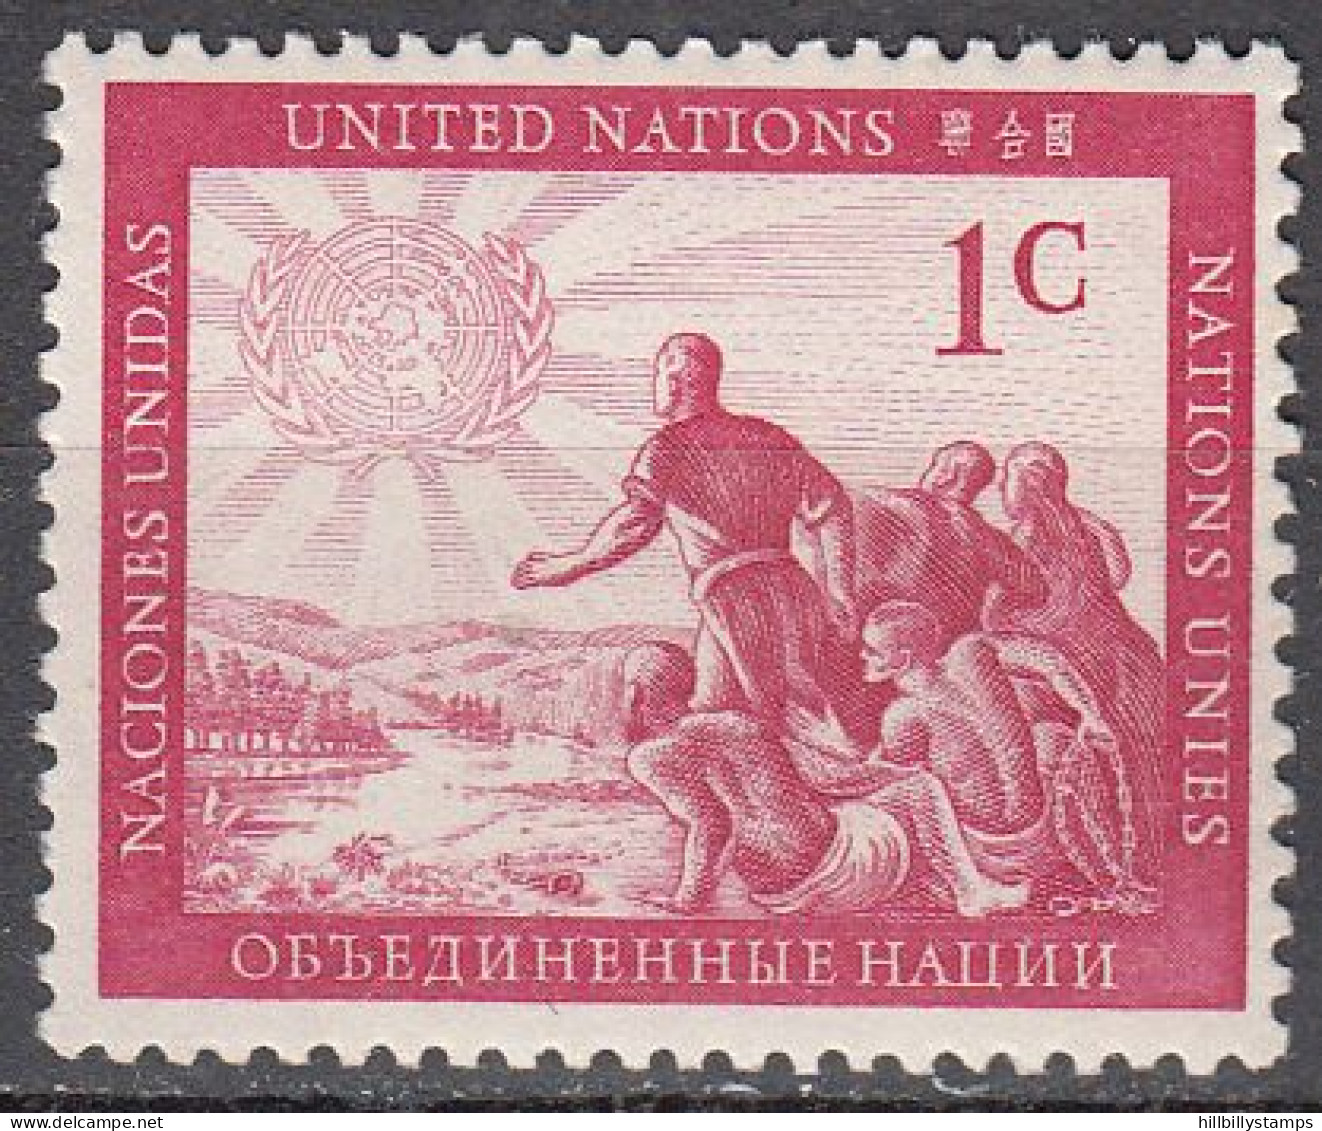 UNITED NATIONS NY   SCOTT NO 1  MNH     YEAR  1951 - Ungebraucht